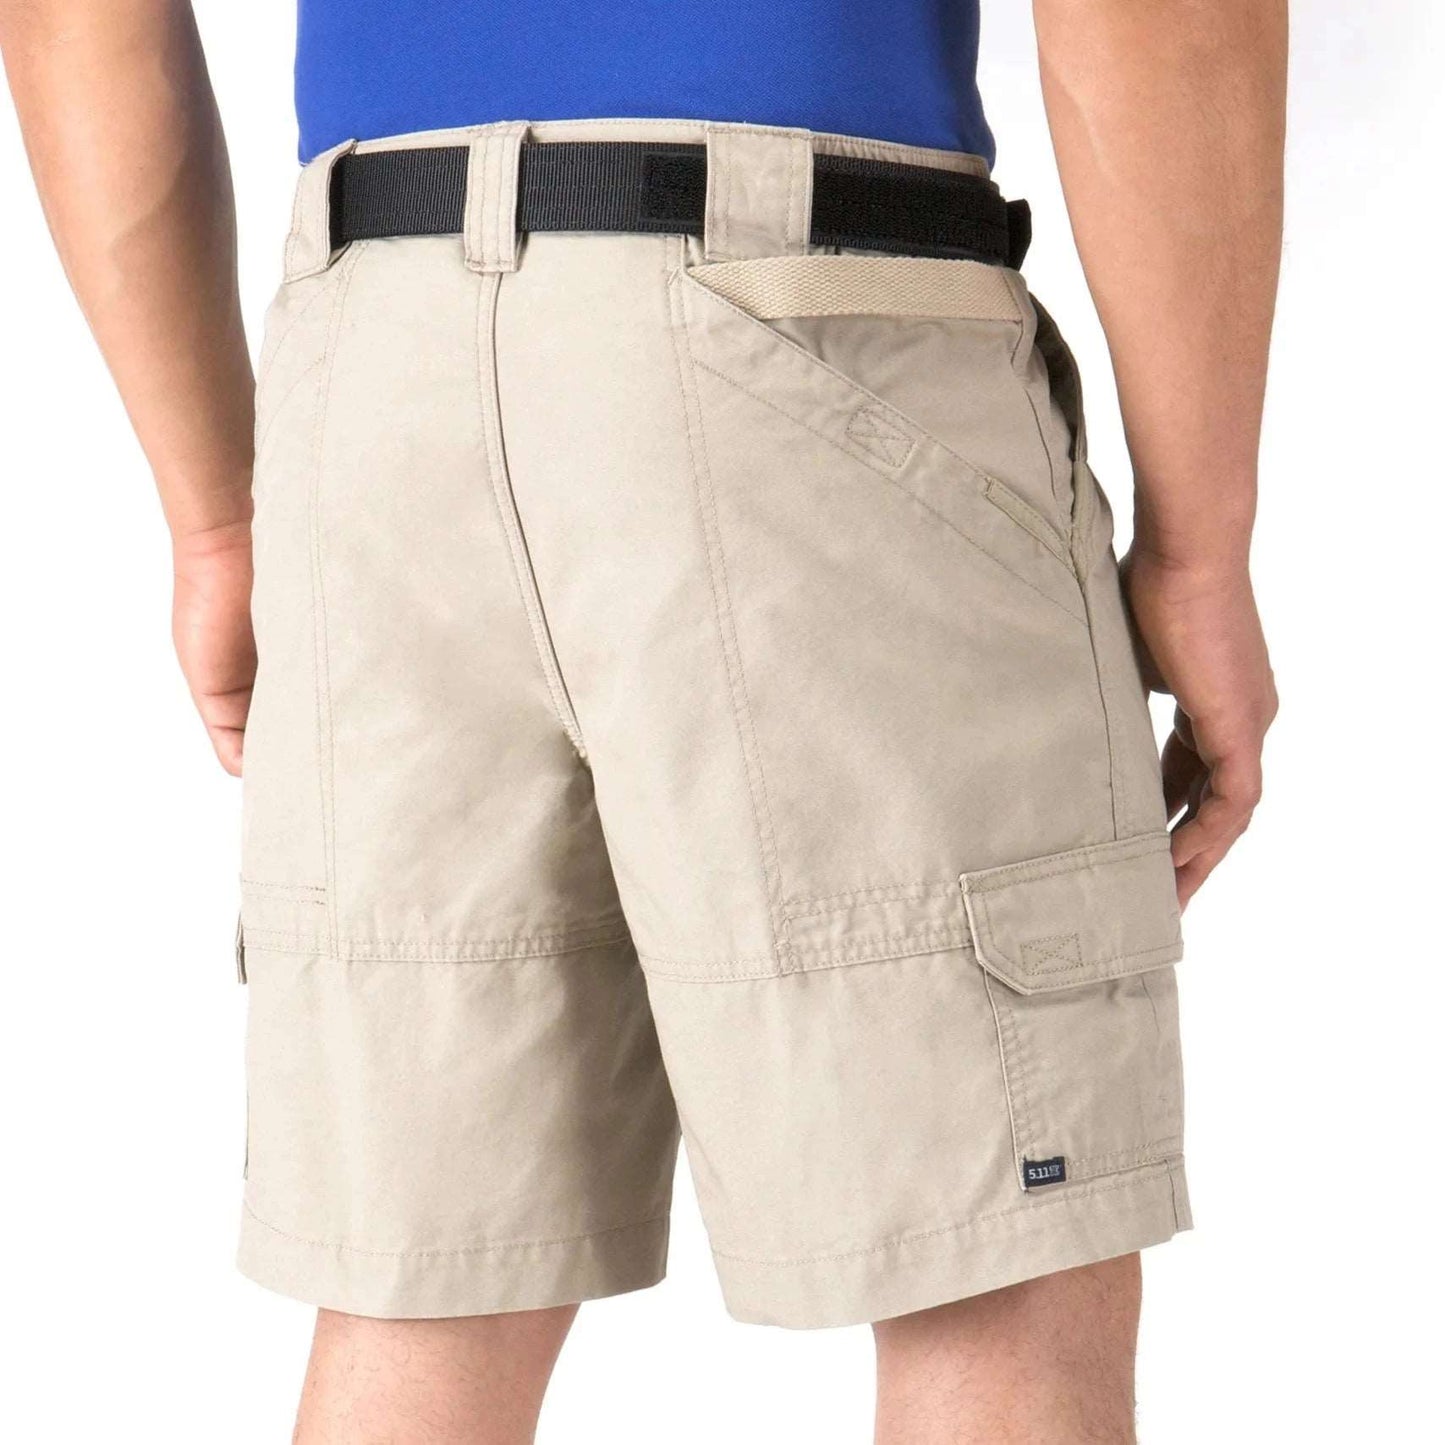 Shorts - 5.11 Tactical 9" Cotton Canvas Shorts